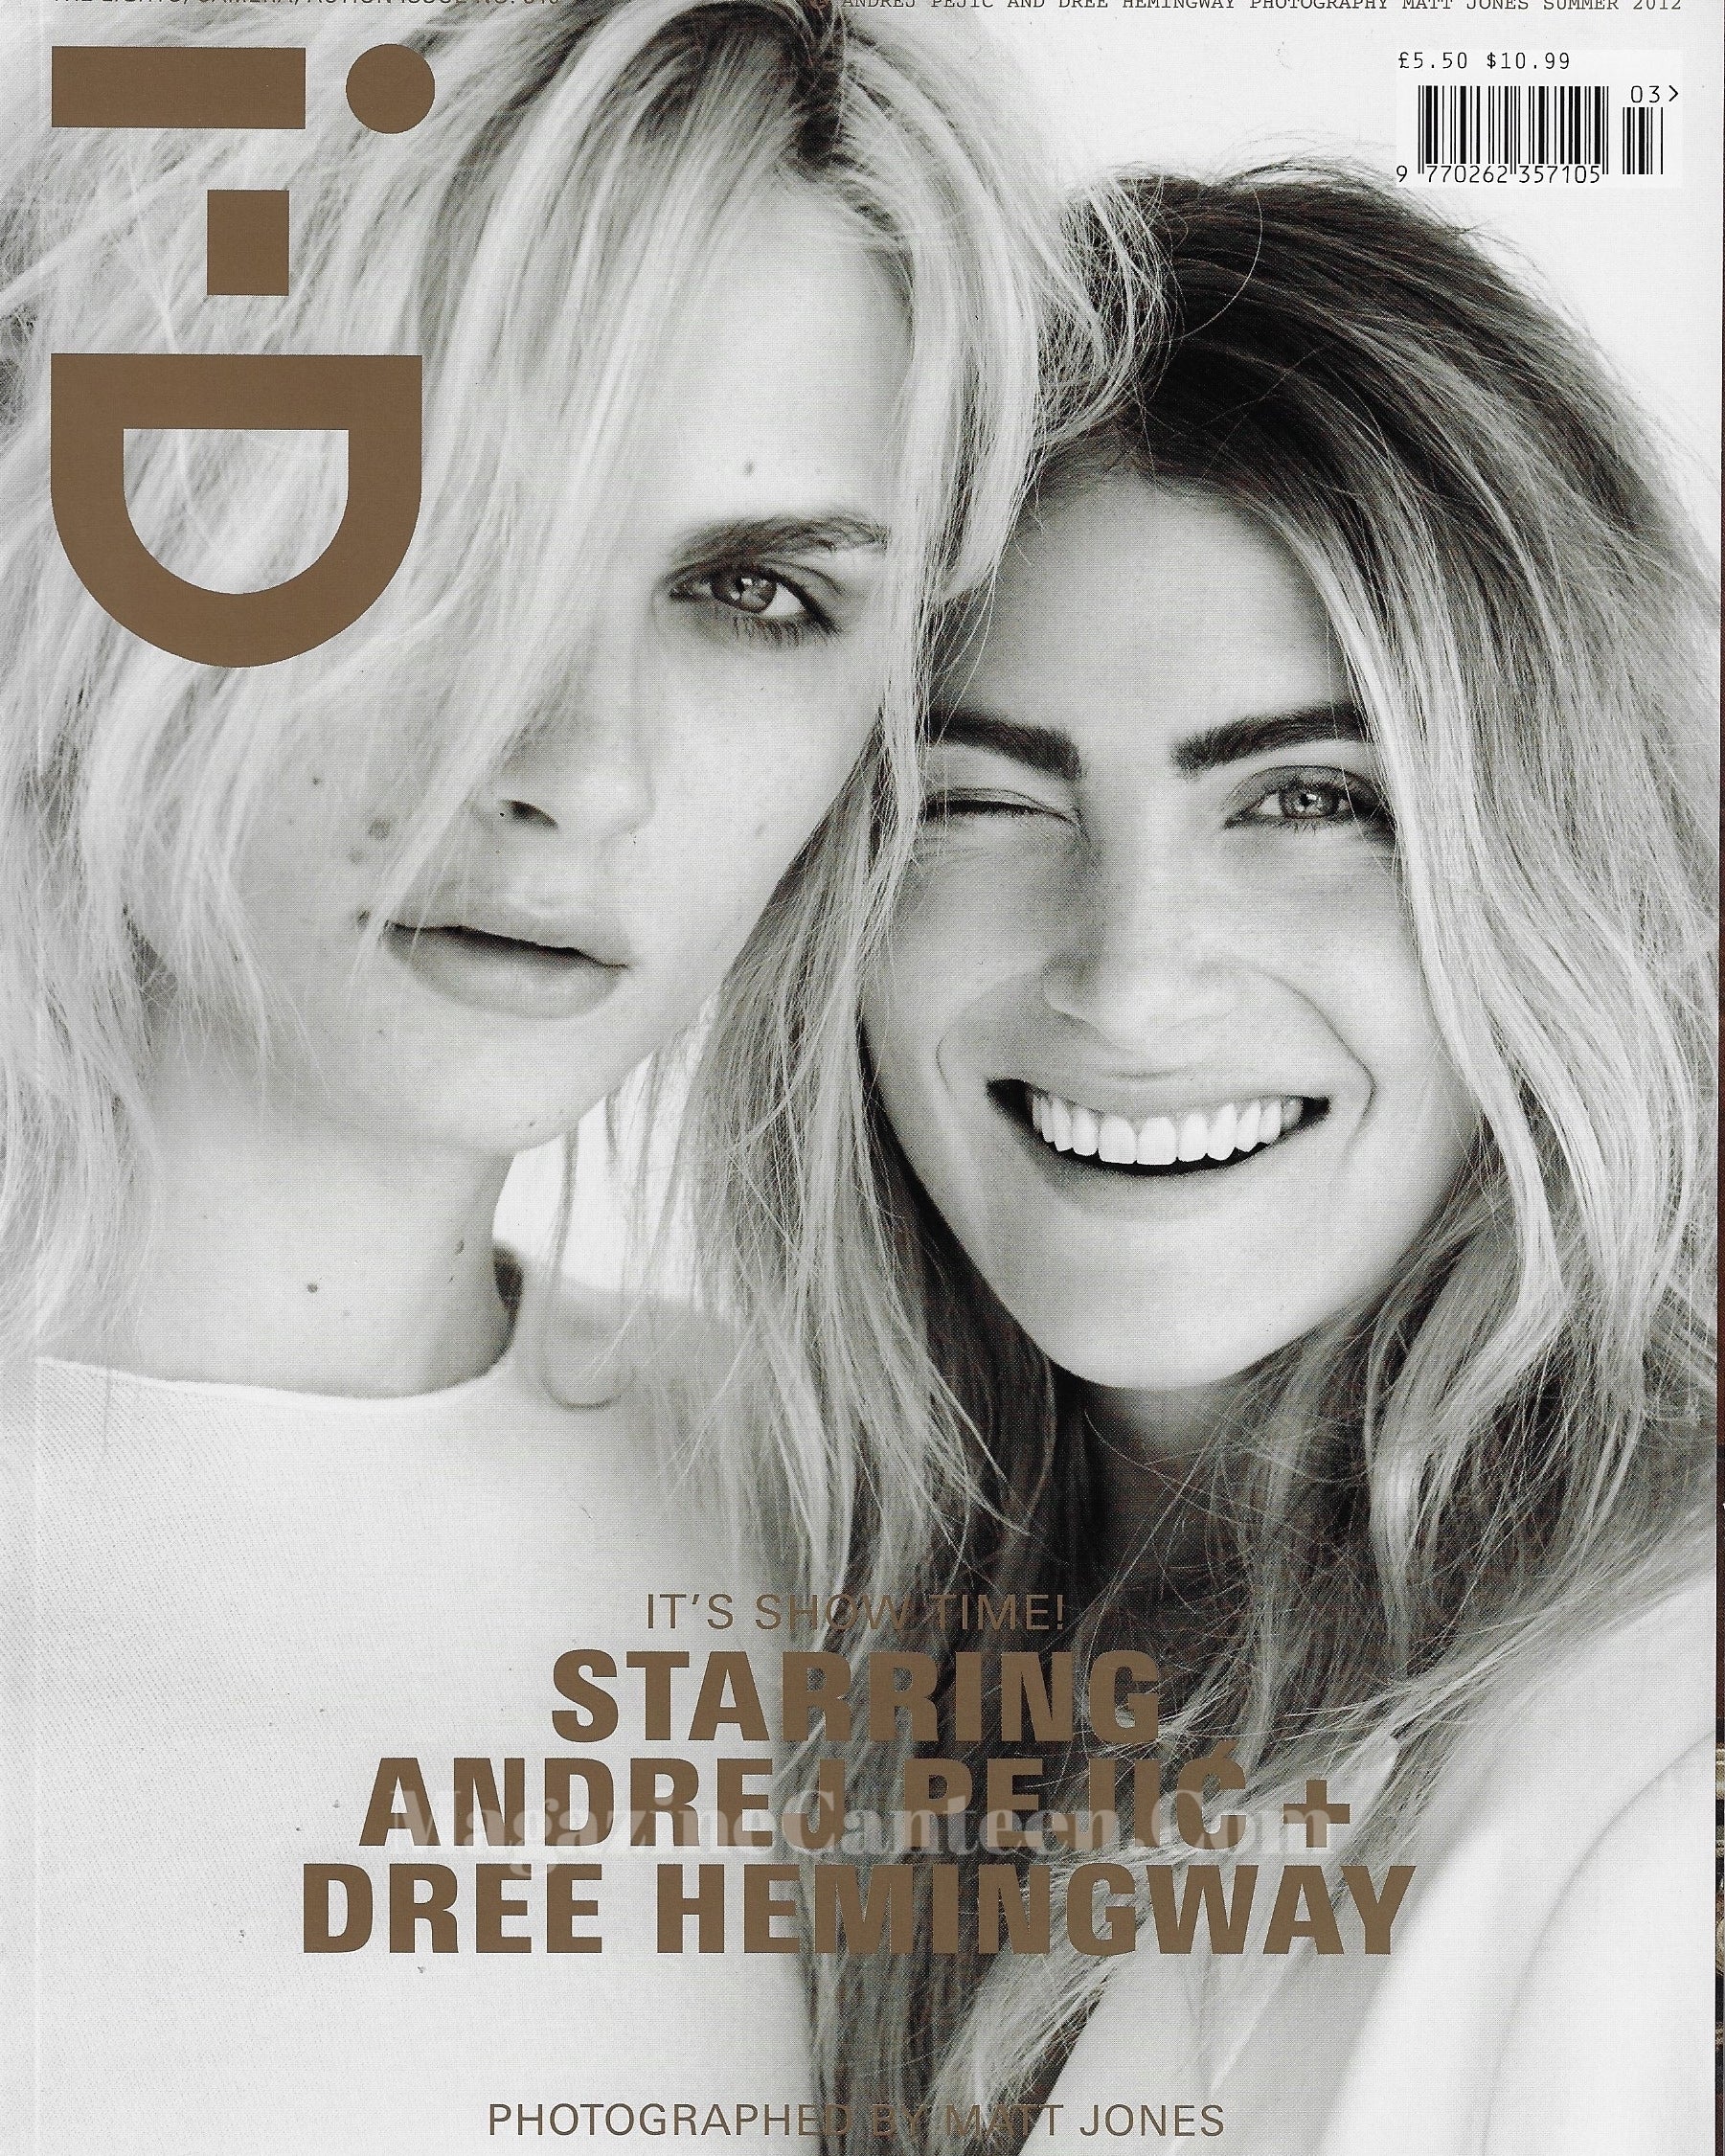 I-D Magazine 319 - Andrej Pejic & Dree Hemingway 2012